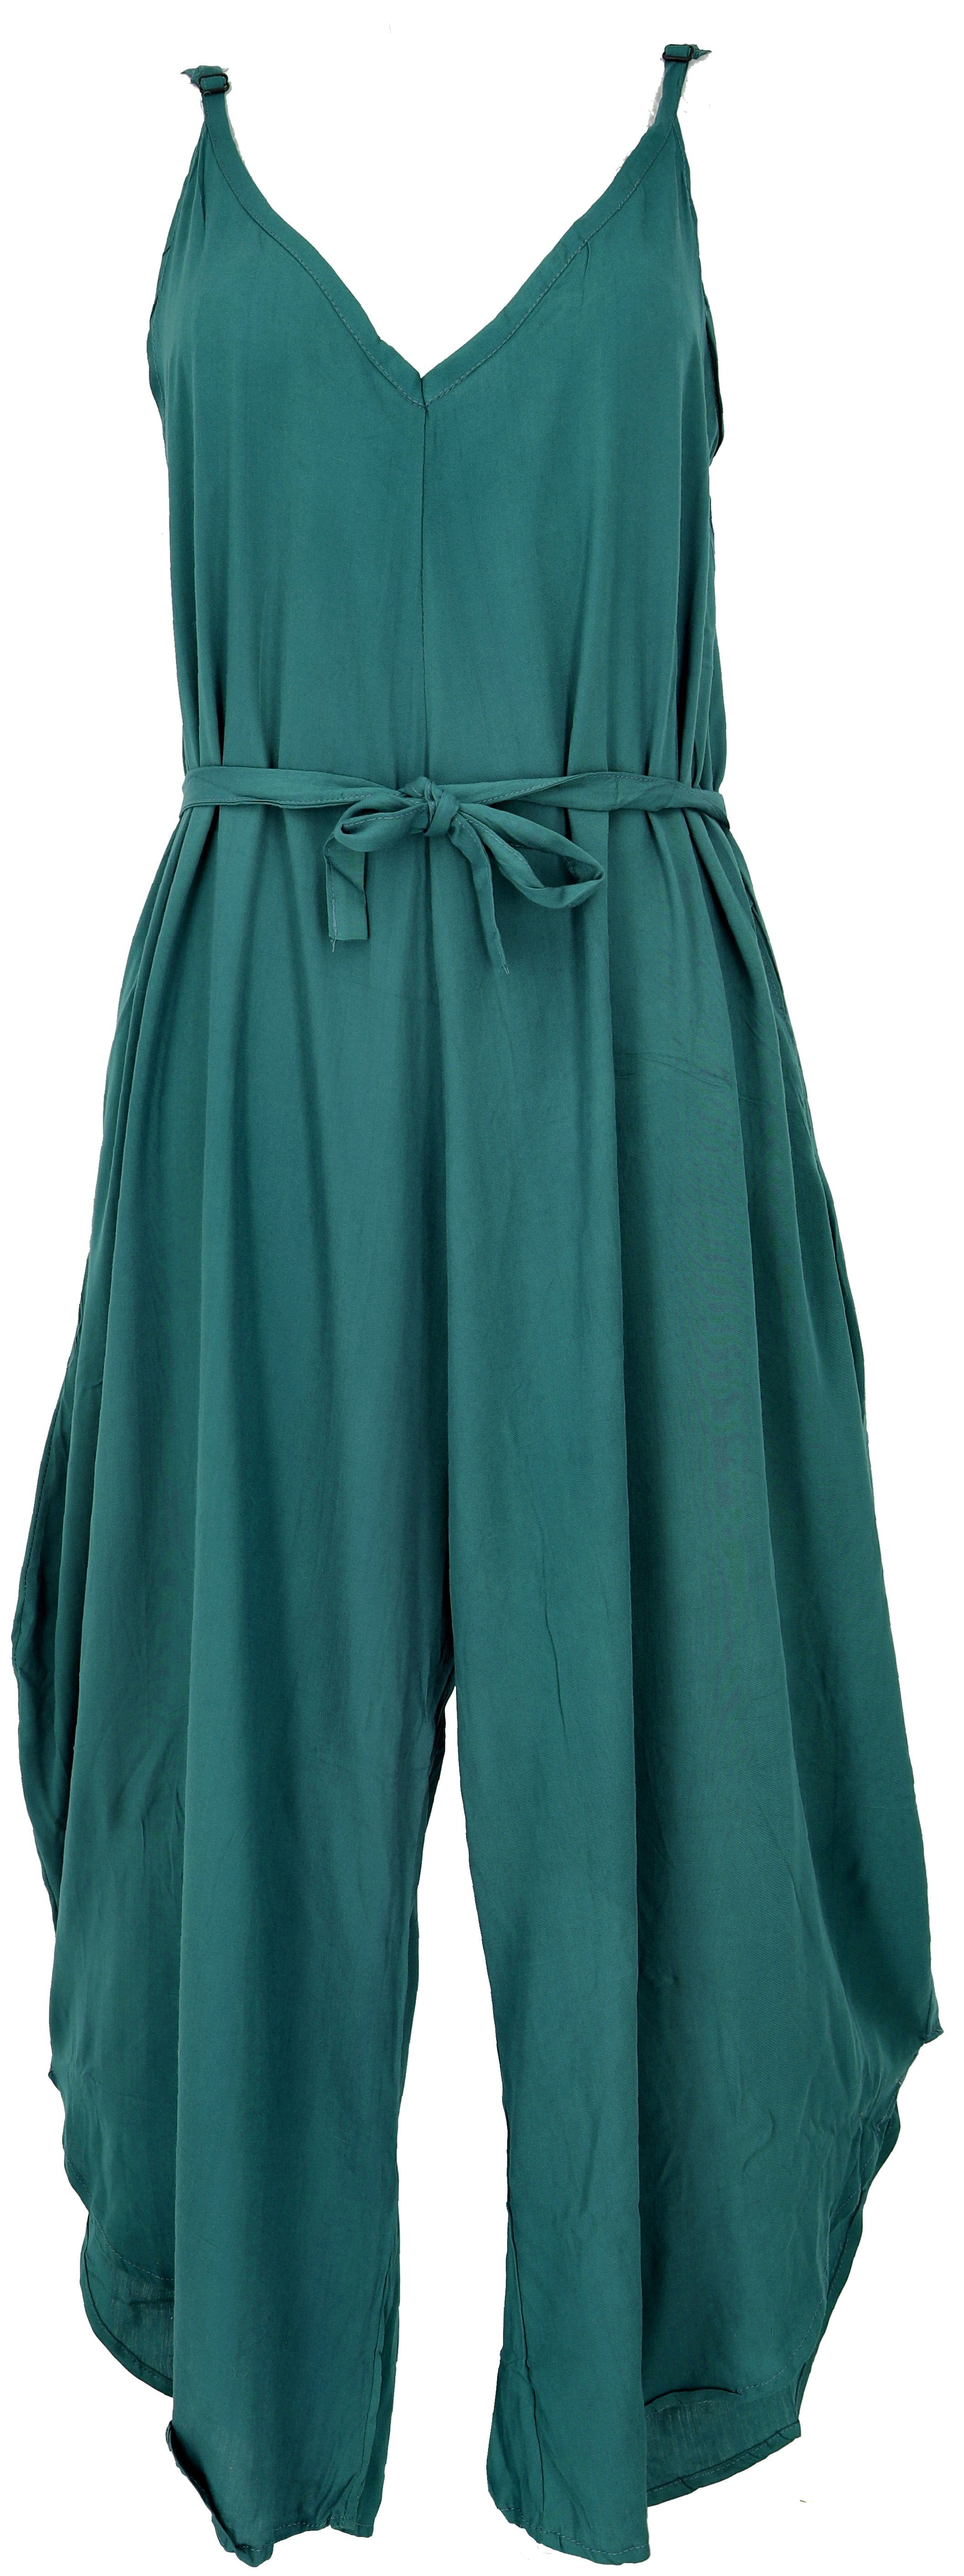 Guru-Shop Relaxhose Einfarbiger Jumpsuit, Sommer Overall,.. alternative Bekleidung dunkelgrün